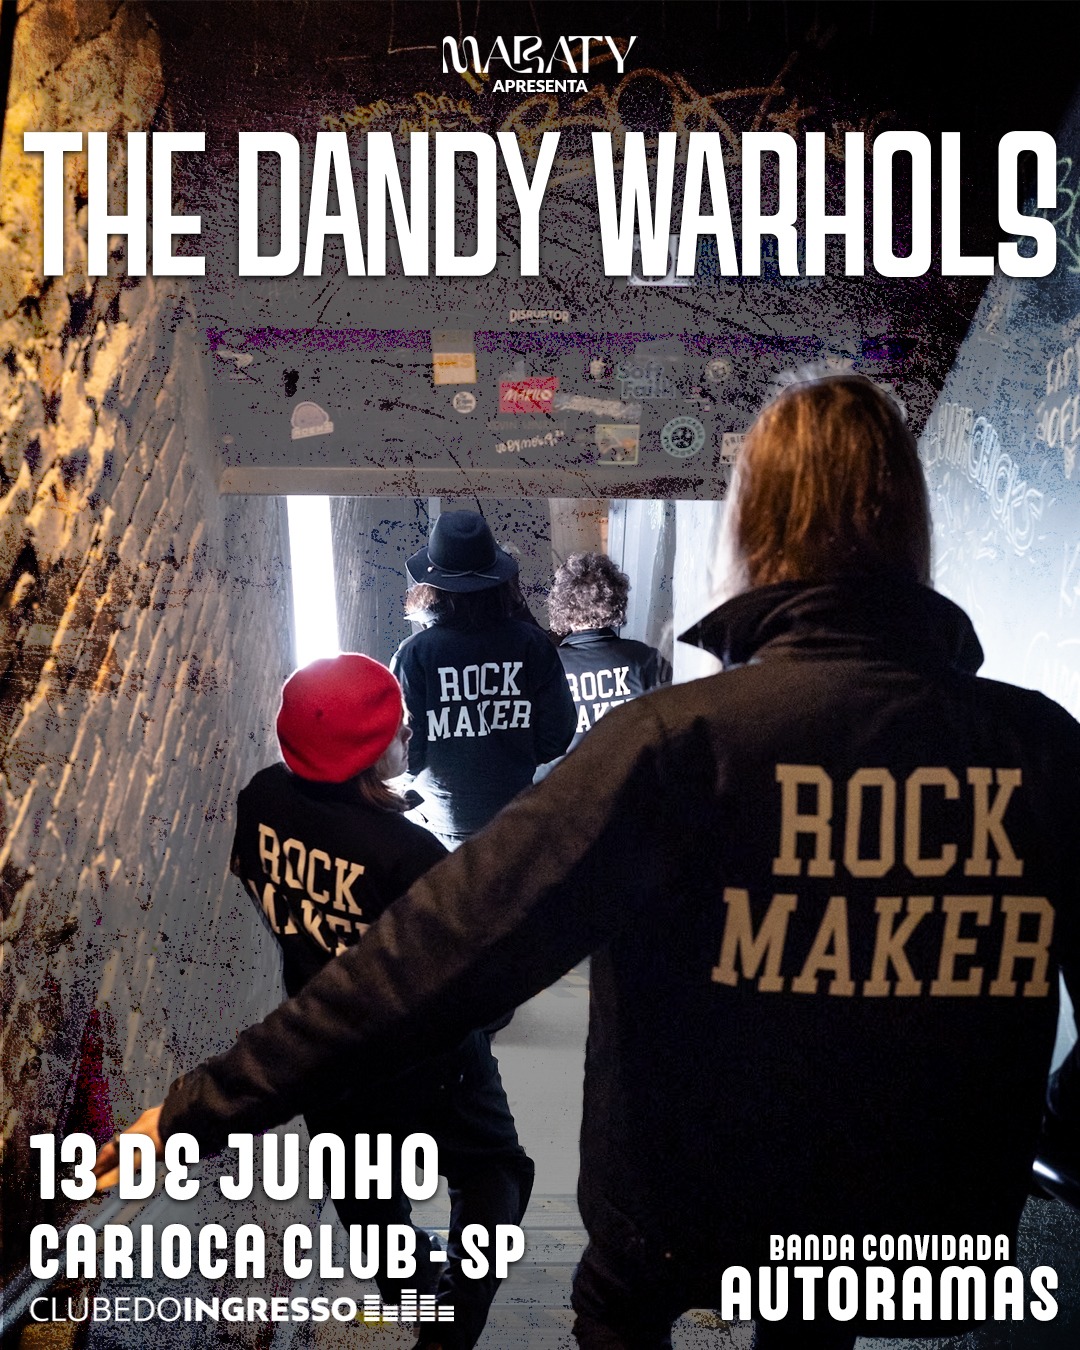 THE DANDY WARHOLS /SP/ 13 JUNHO thumbnail